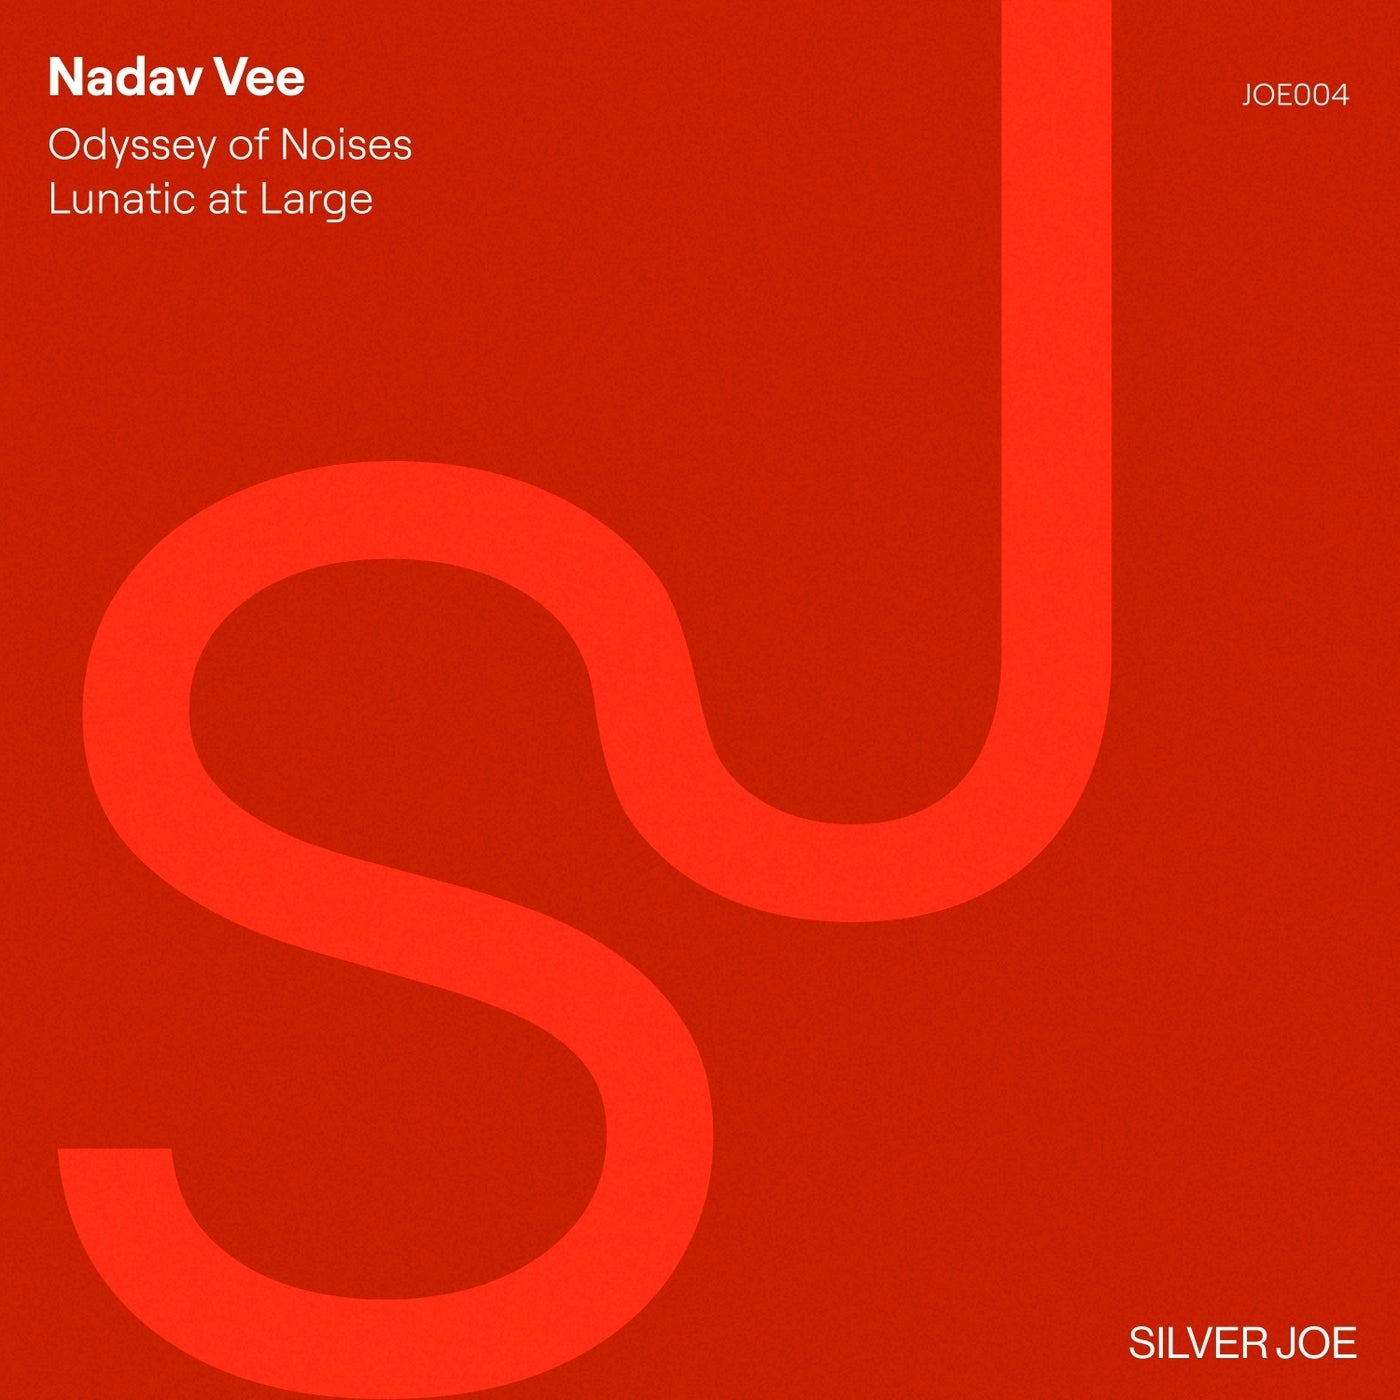 Cover - Nadav Vee - Odyssey of Noises (Original Mix)